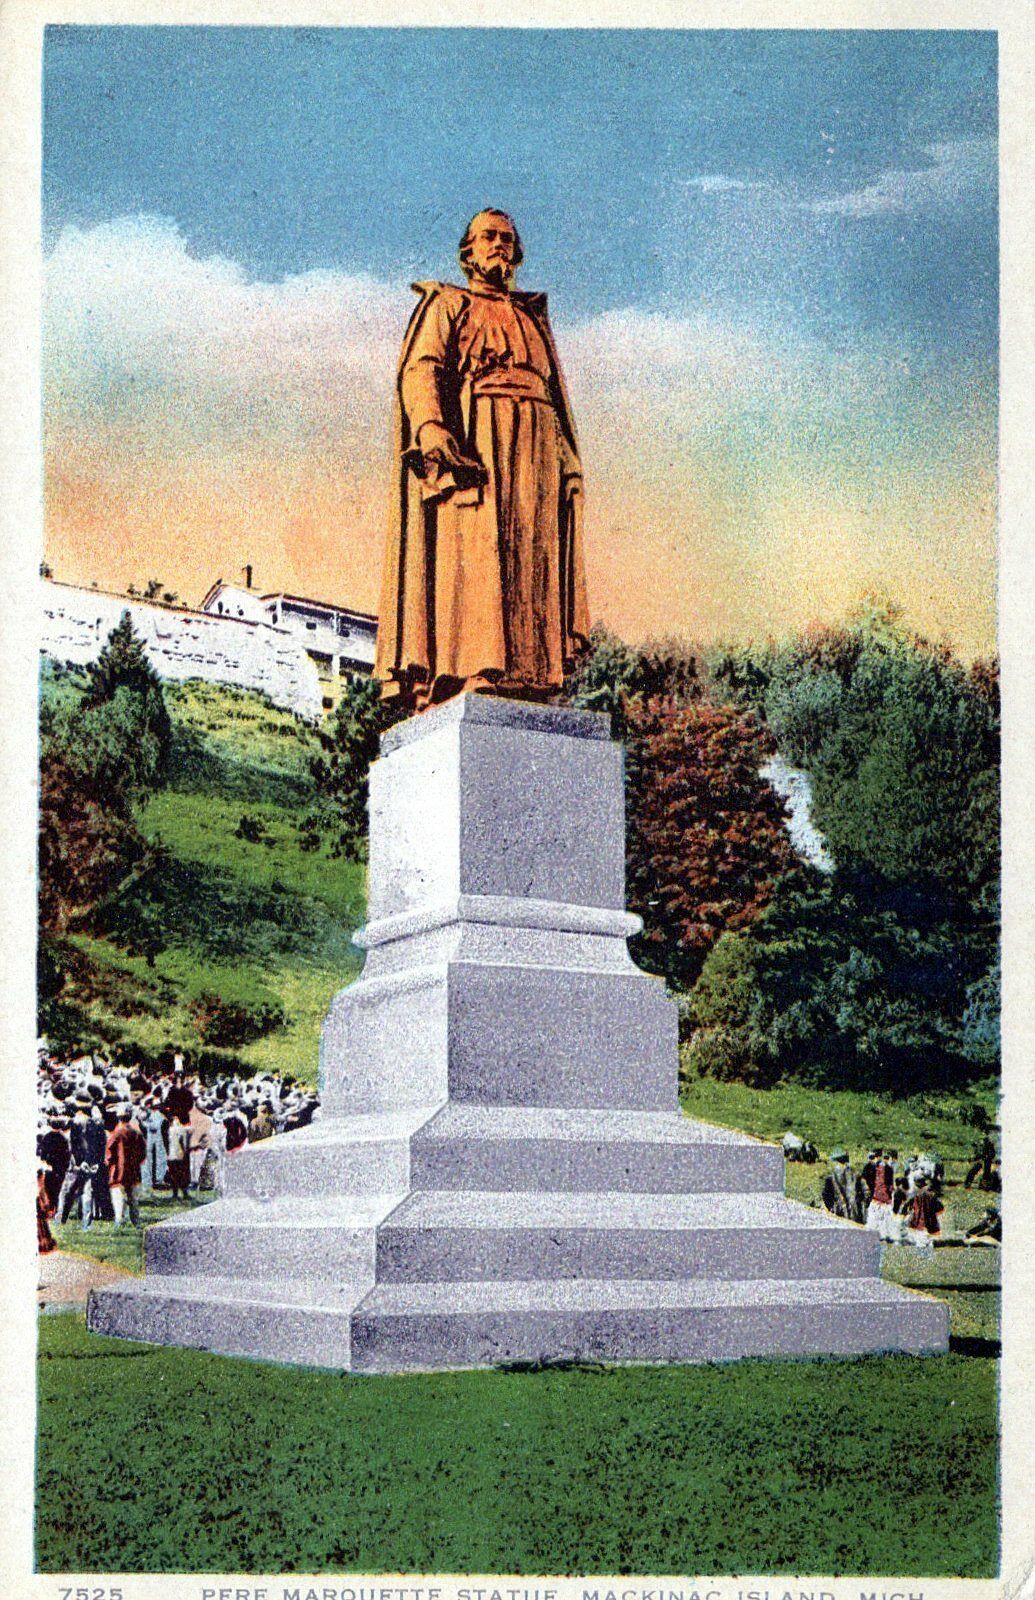 Perf Marquette Statue Mackinac Island Michigan Vintage White Border Post Card